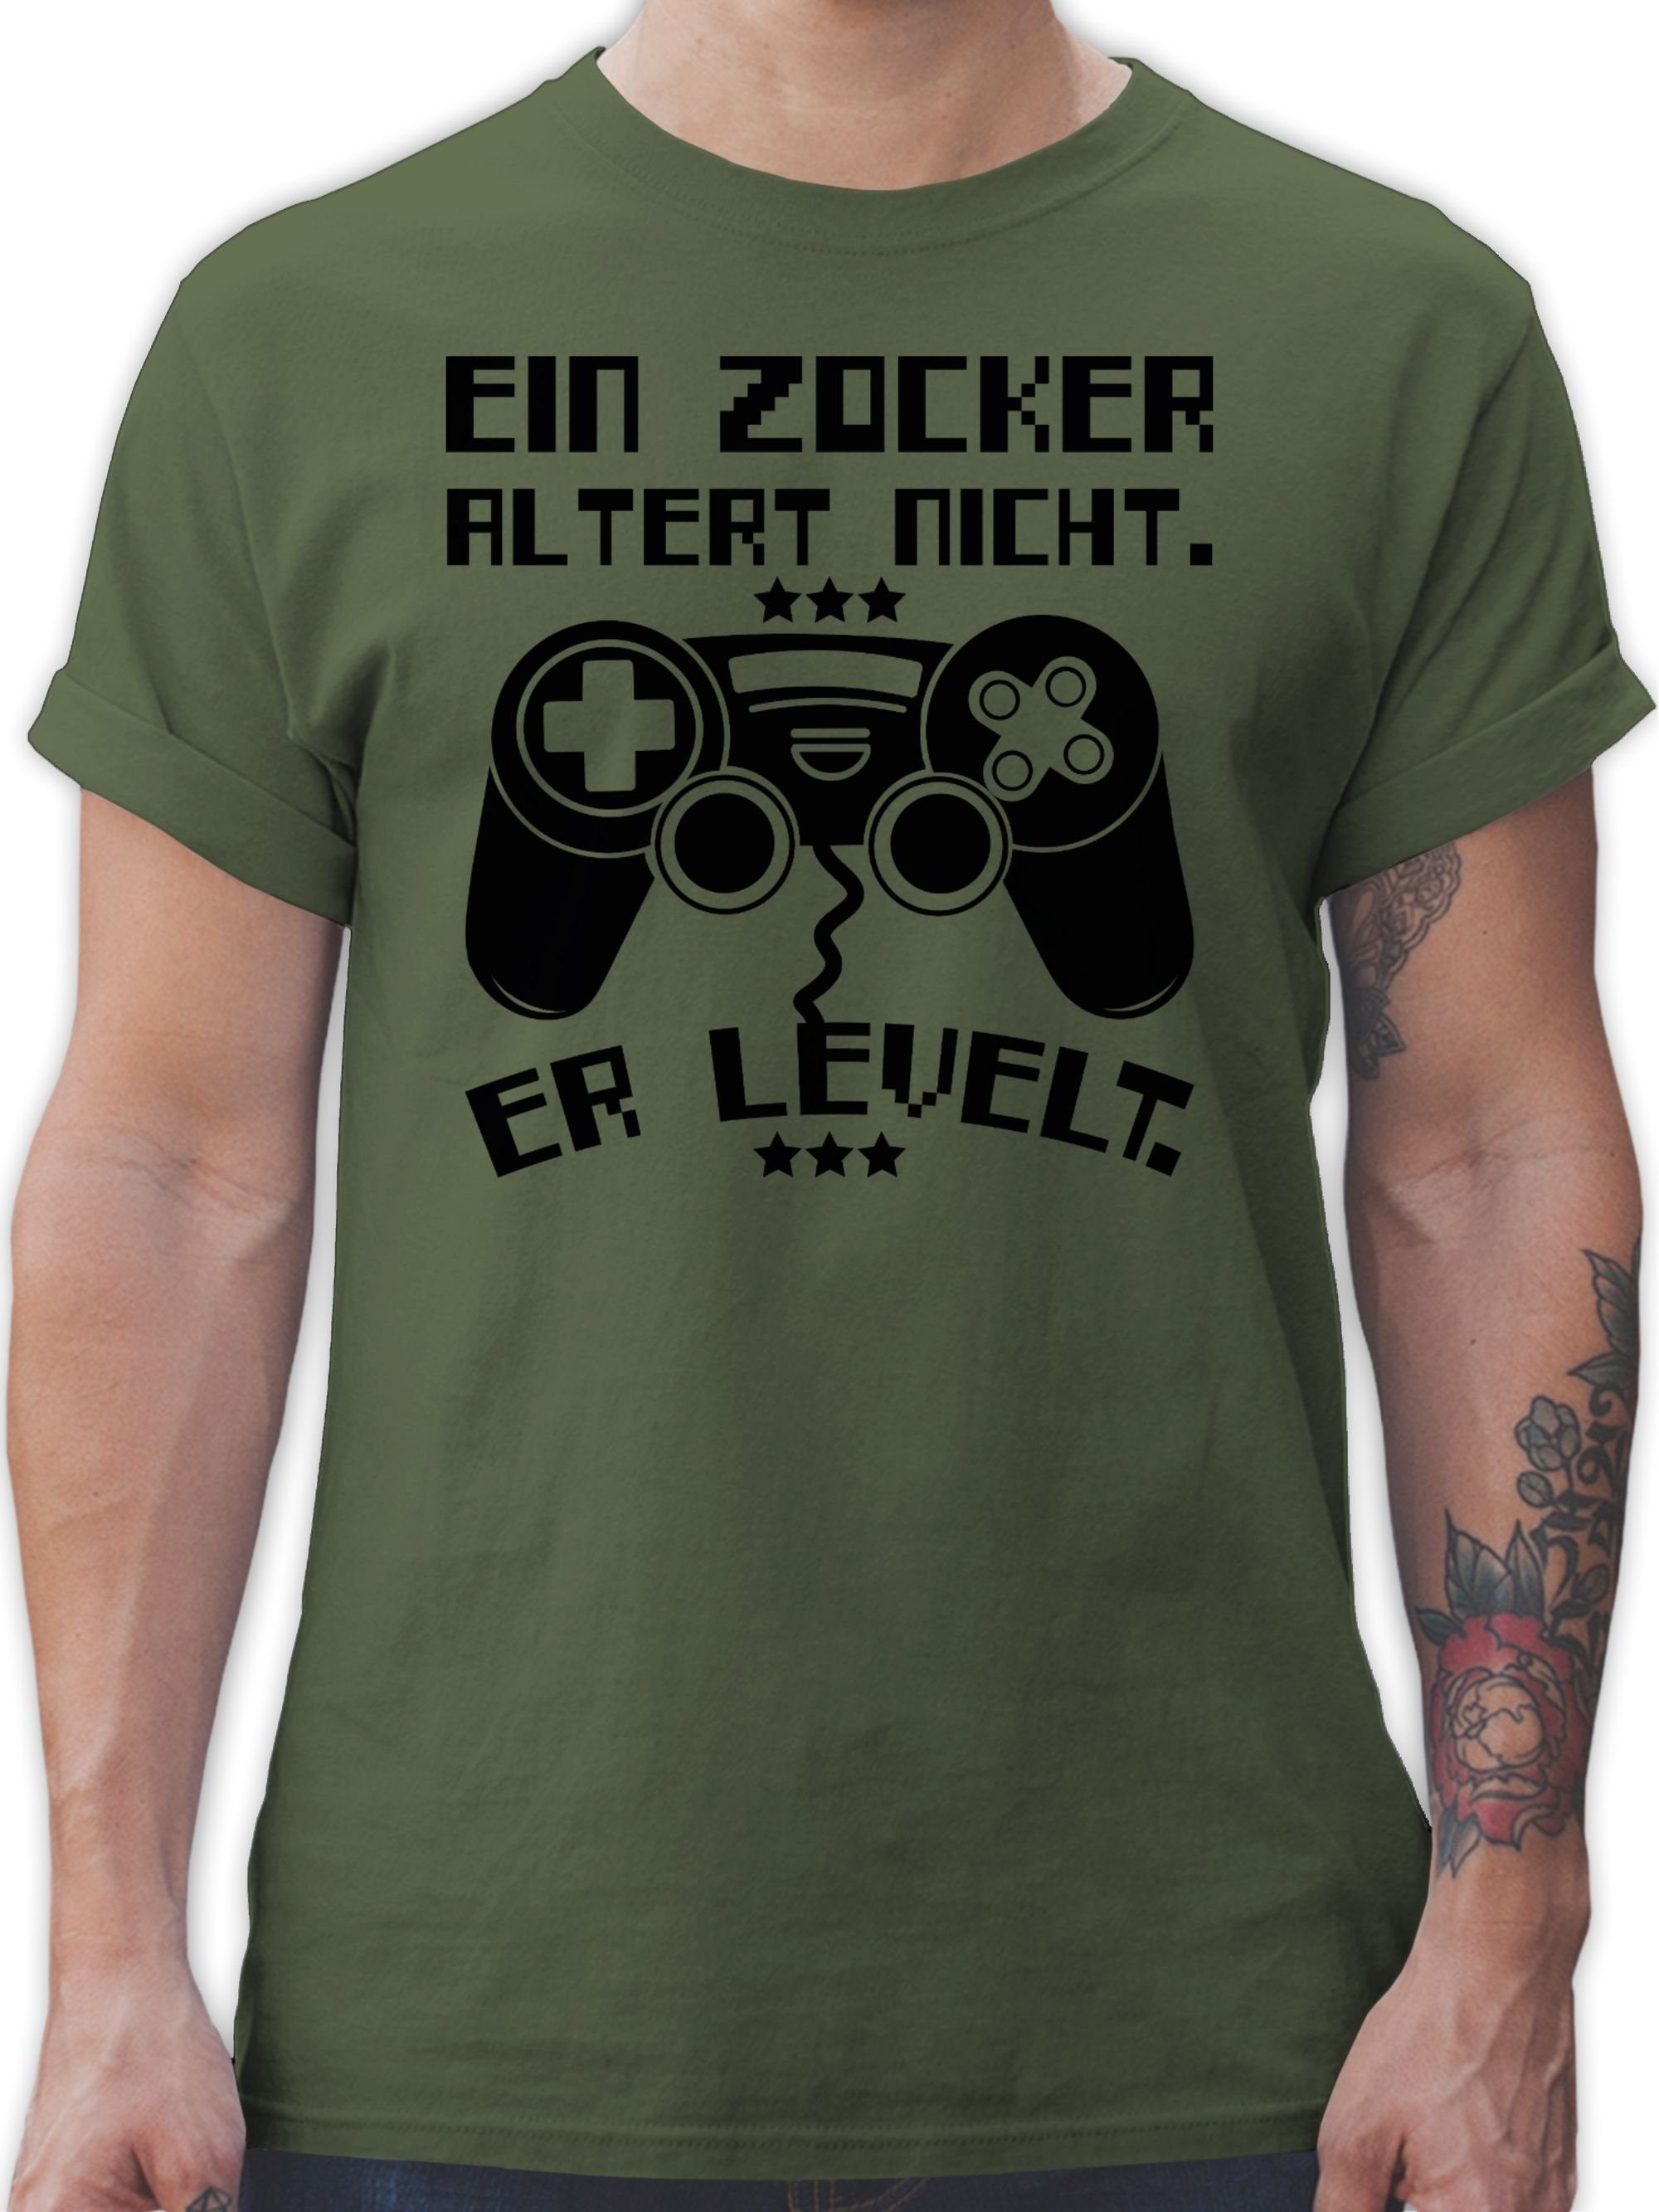 altert Grün 03 levelt Nerd Zocker Army er Ein Shirtracer - T-Shirt Geschenke nicht